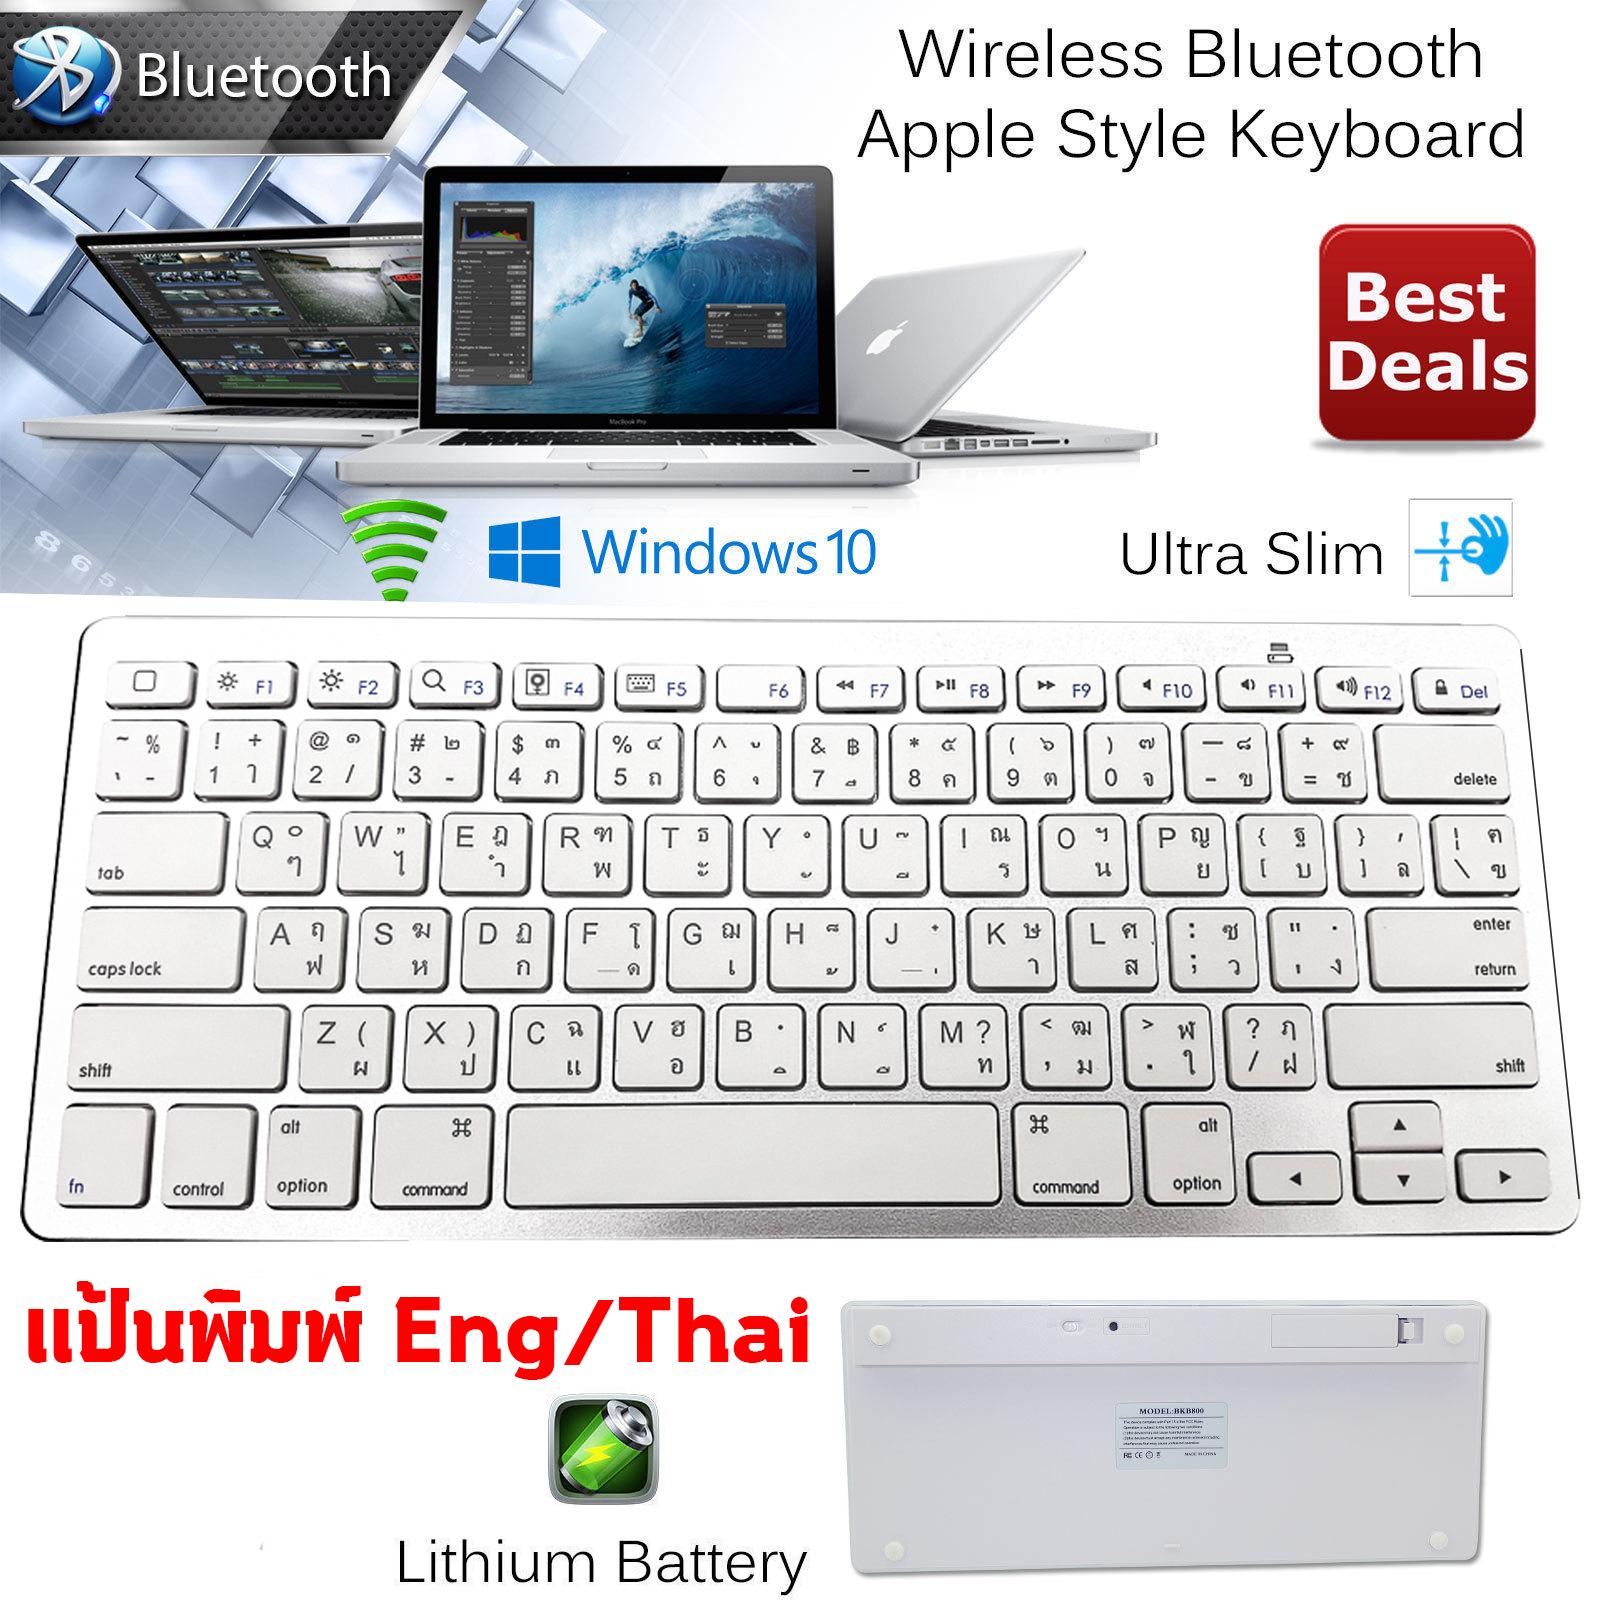 KEYBOARD USB Bluetooth Wireless Bluetooth TH EN/TH kb-3001 แป้นภาษาไทย-อังกฤษ ไม่ต้องใช้หัว USB Bluetooth